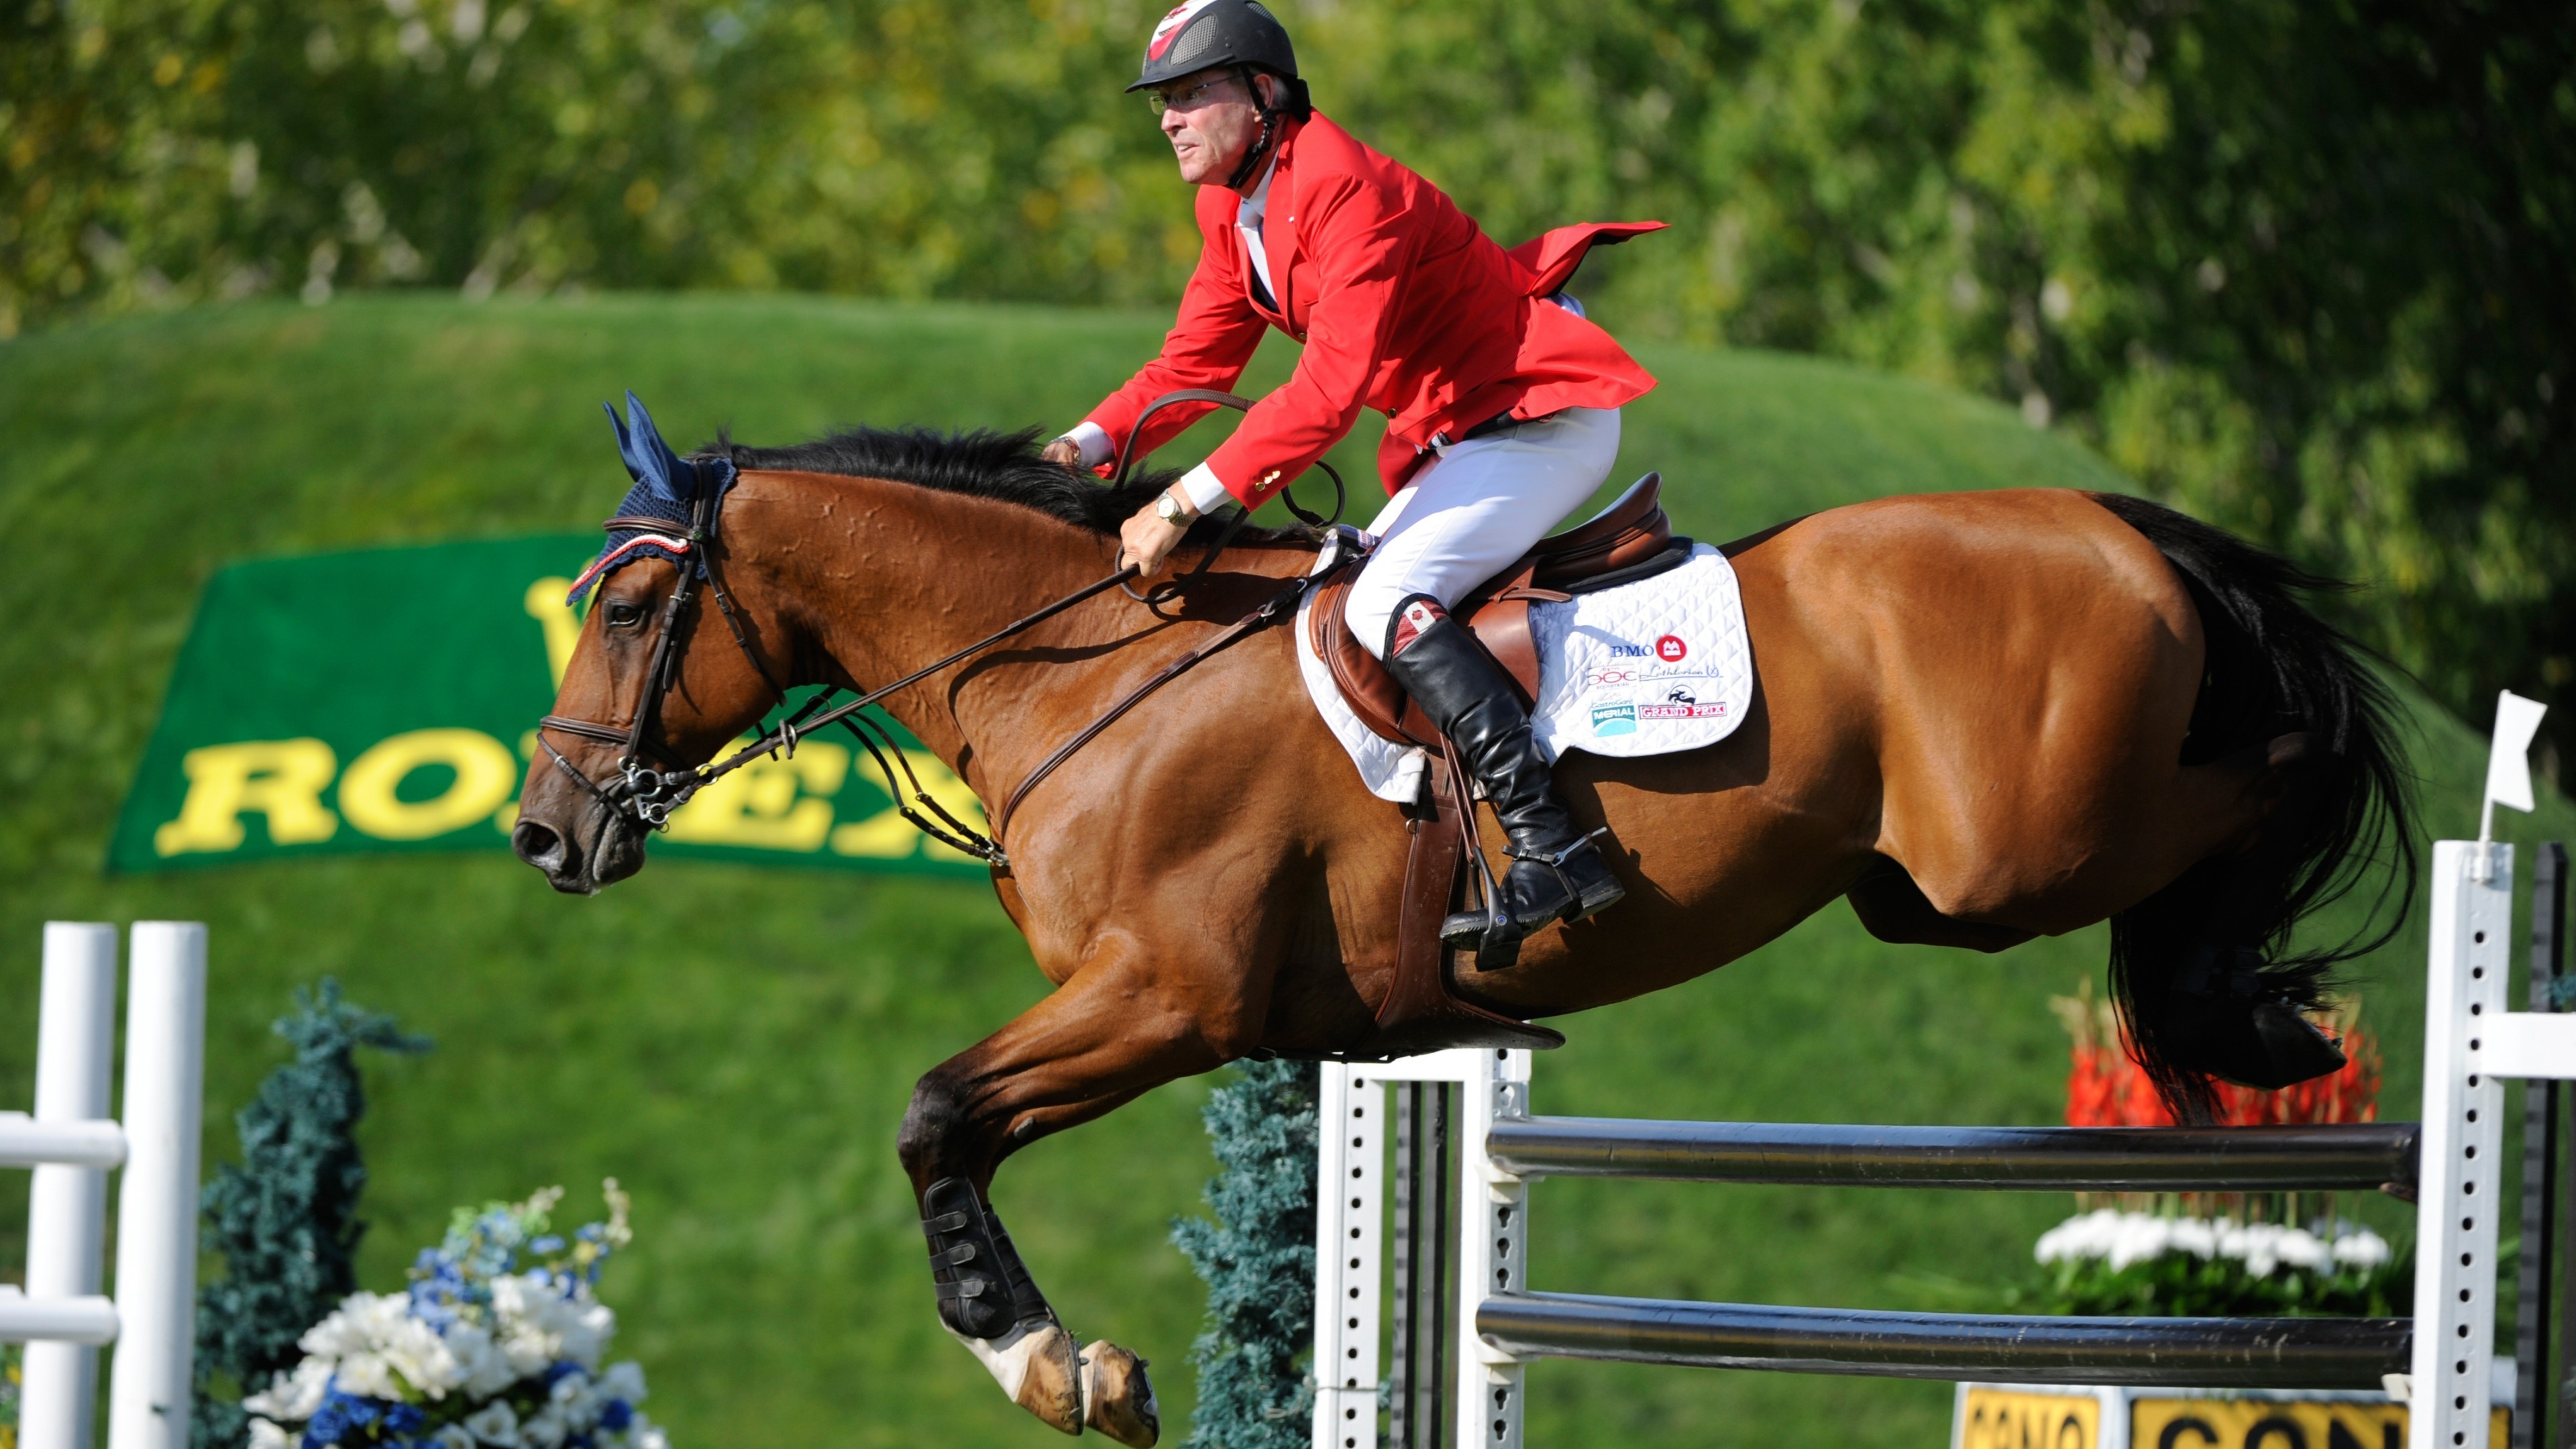 Equestrian Sports: Show jumping at the British Masters Grand Prix, Horse rider. 3840x2160 4K Wallpaper.